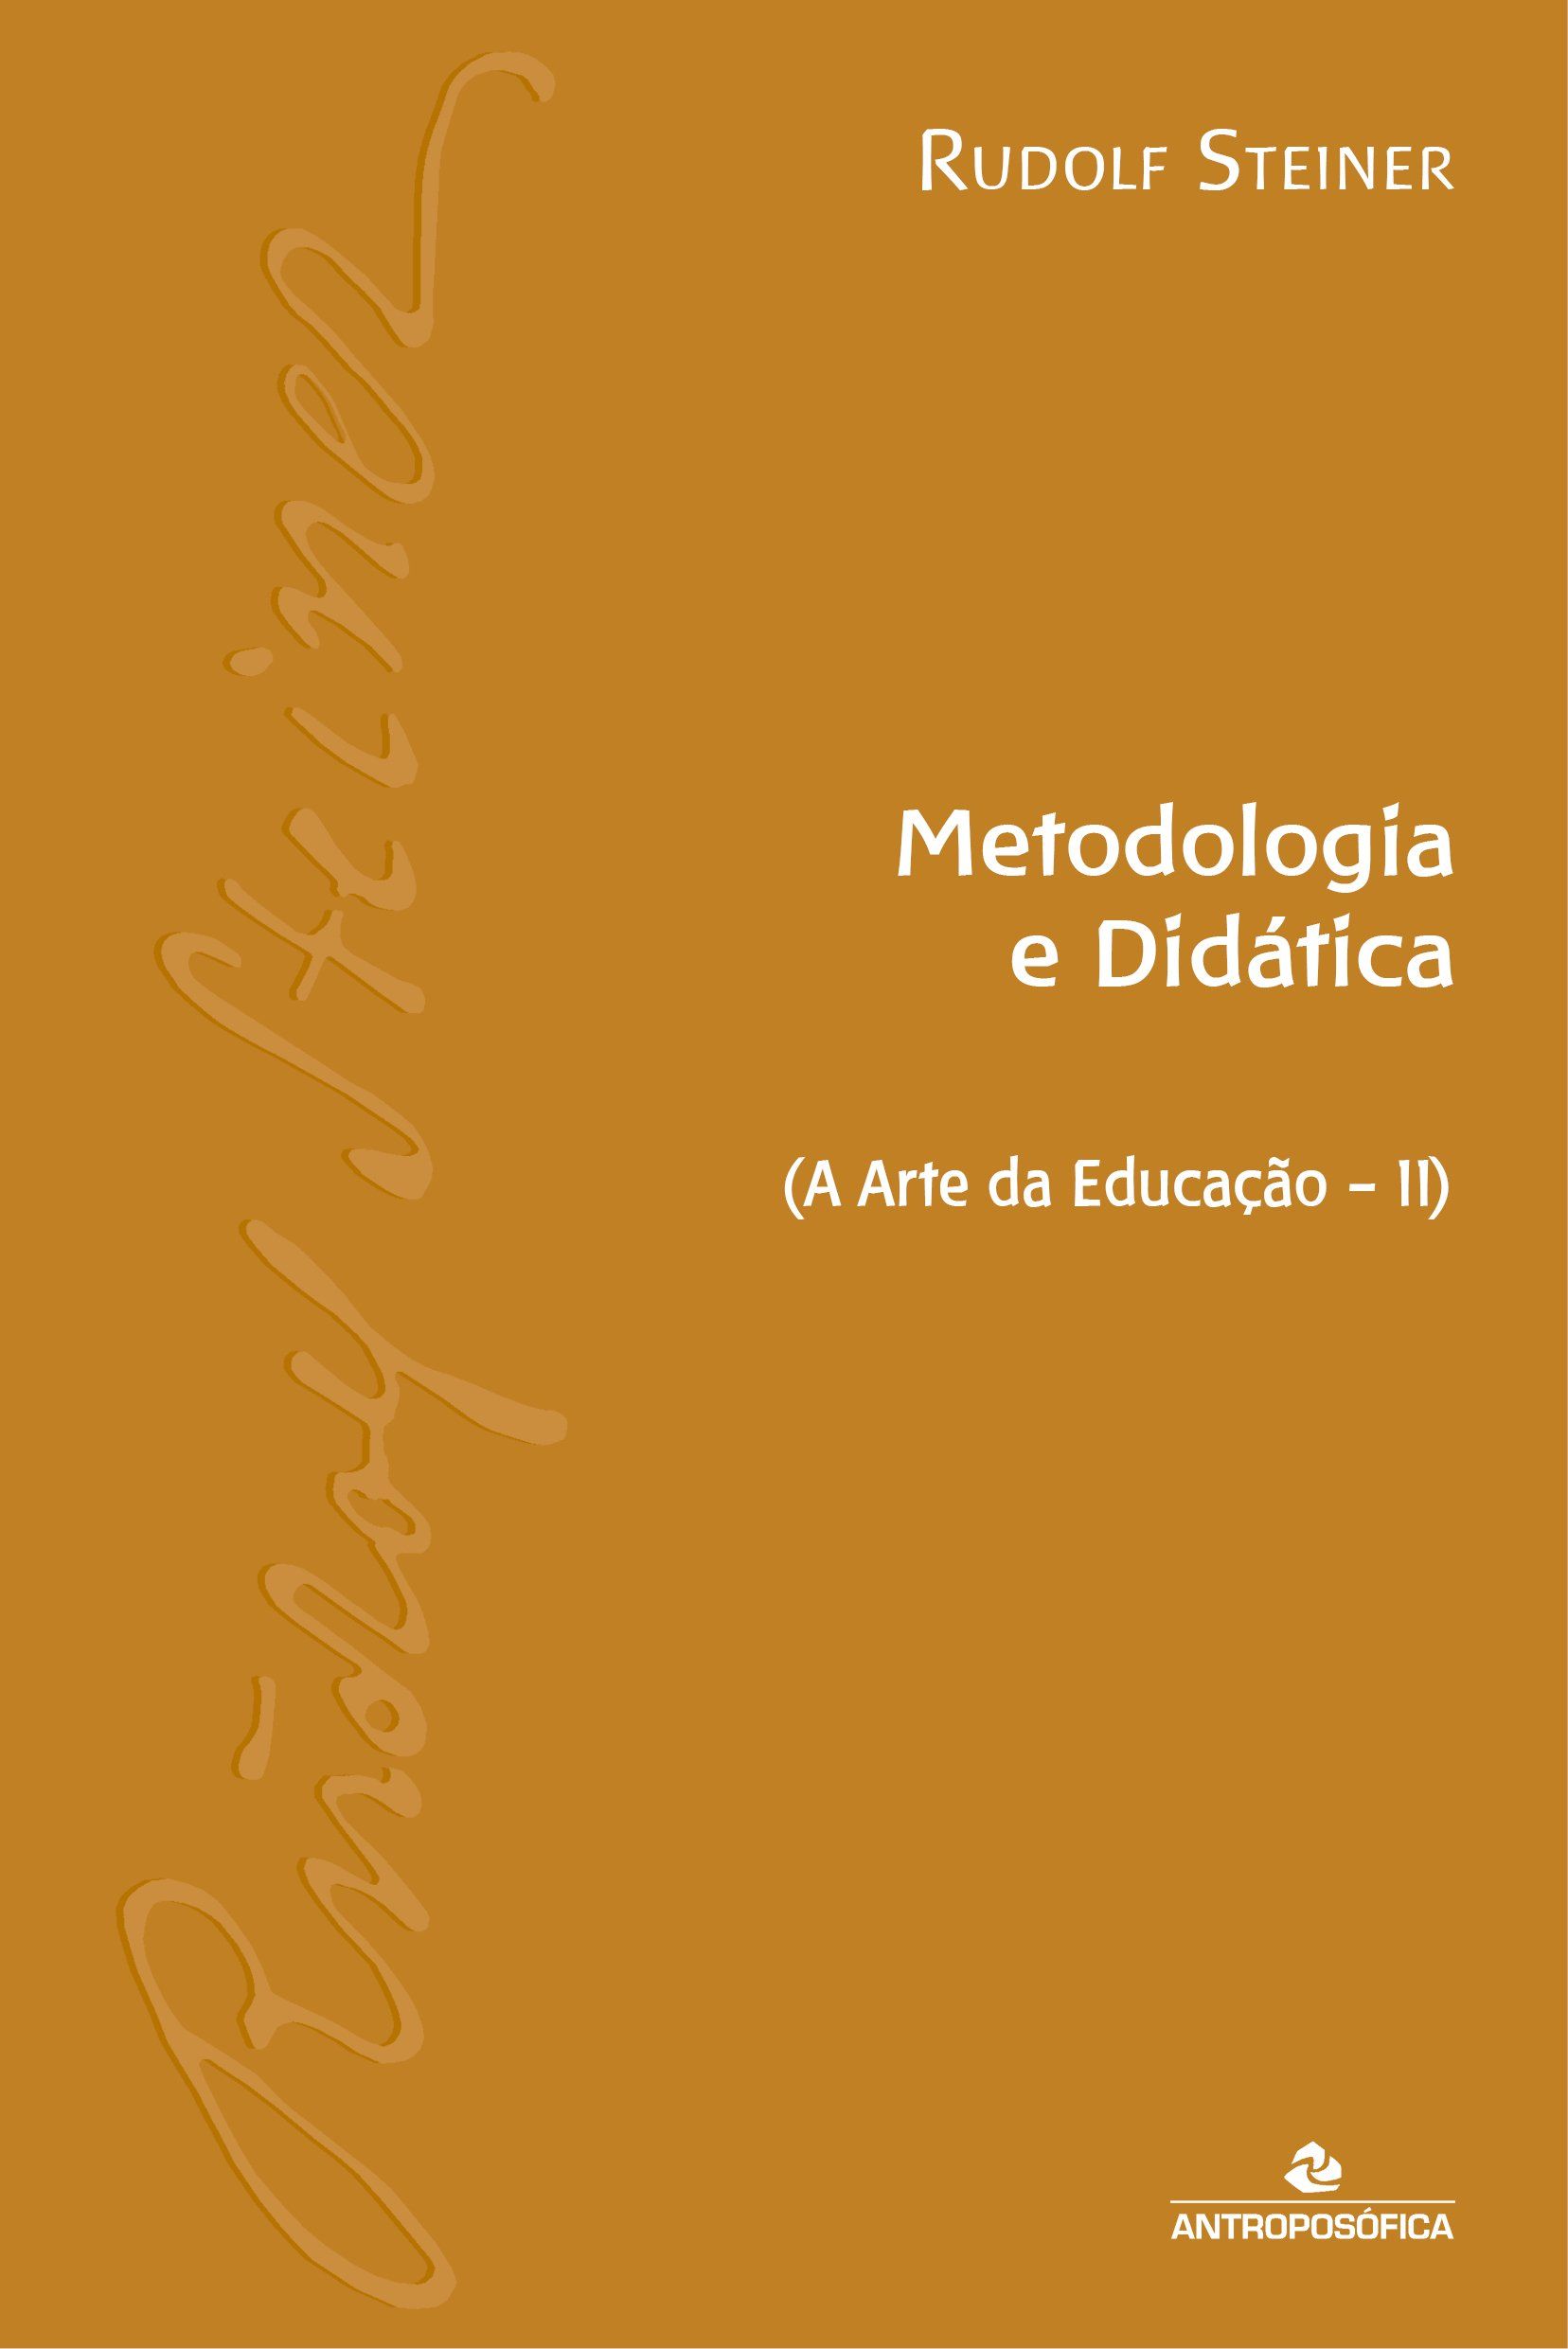 METODOLOGIA E DIDÁTICA - Rudolf Steiner